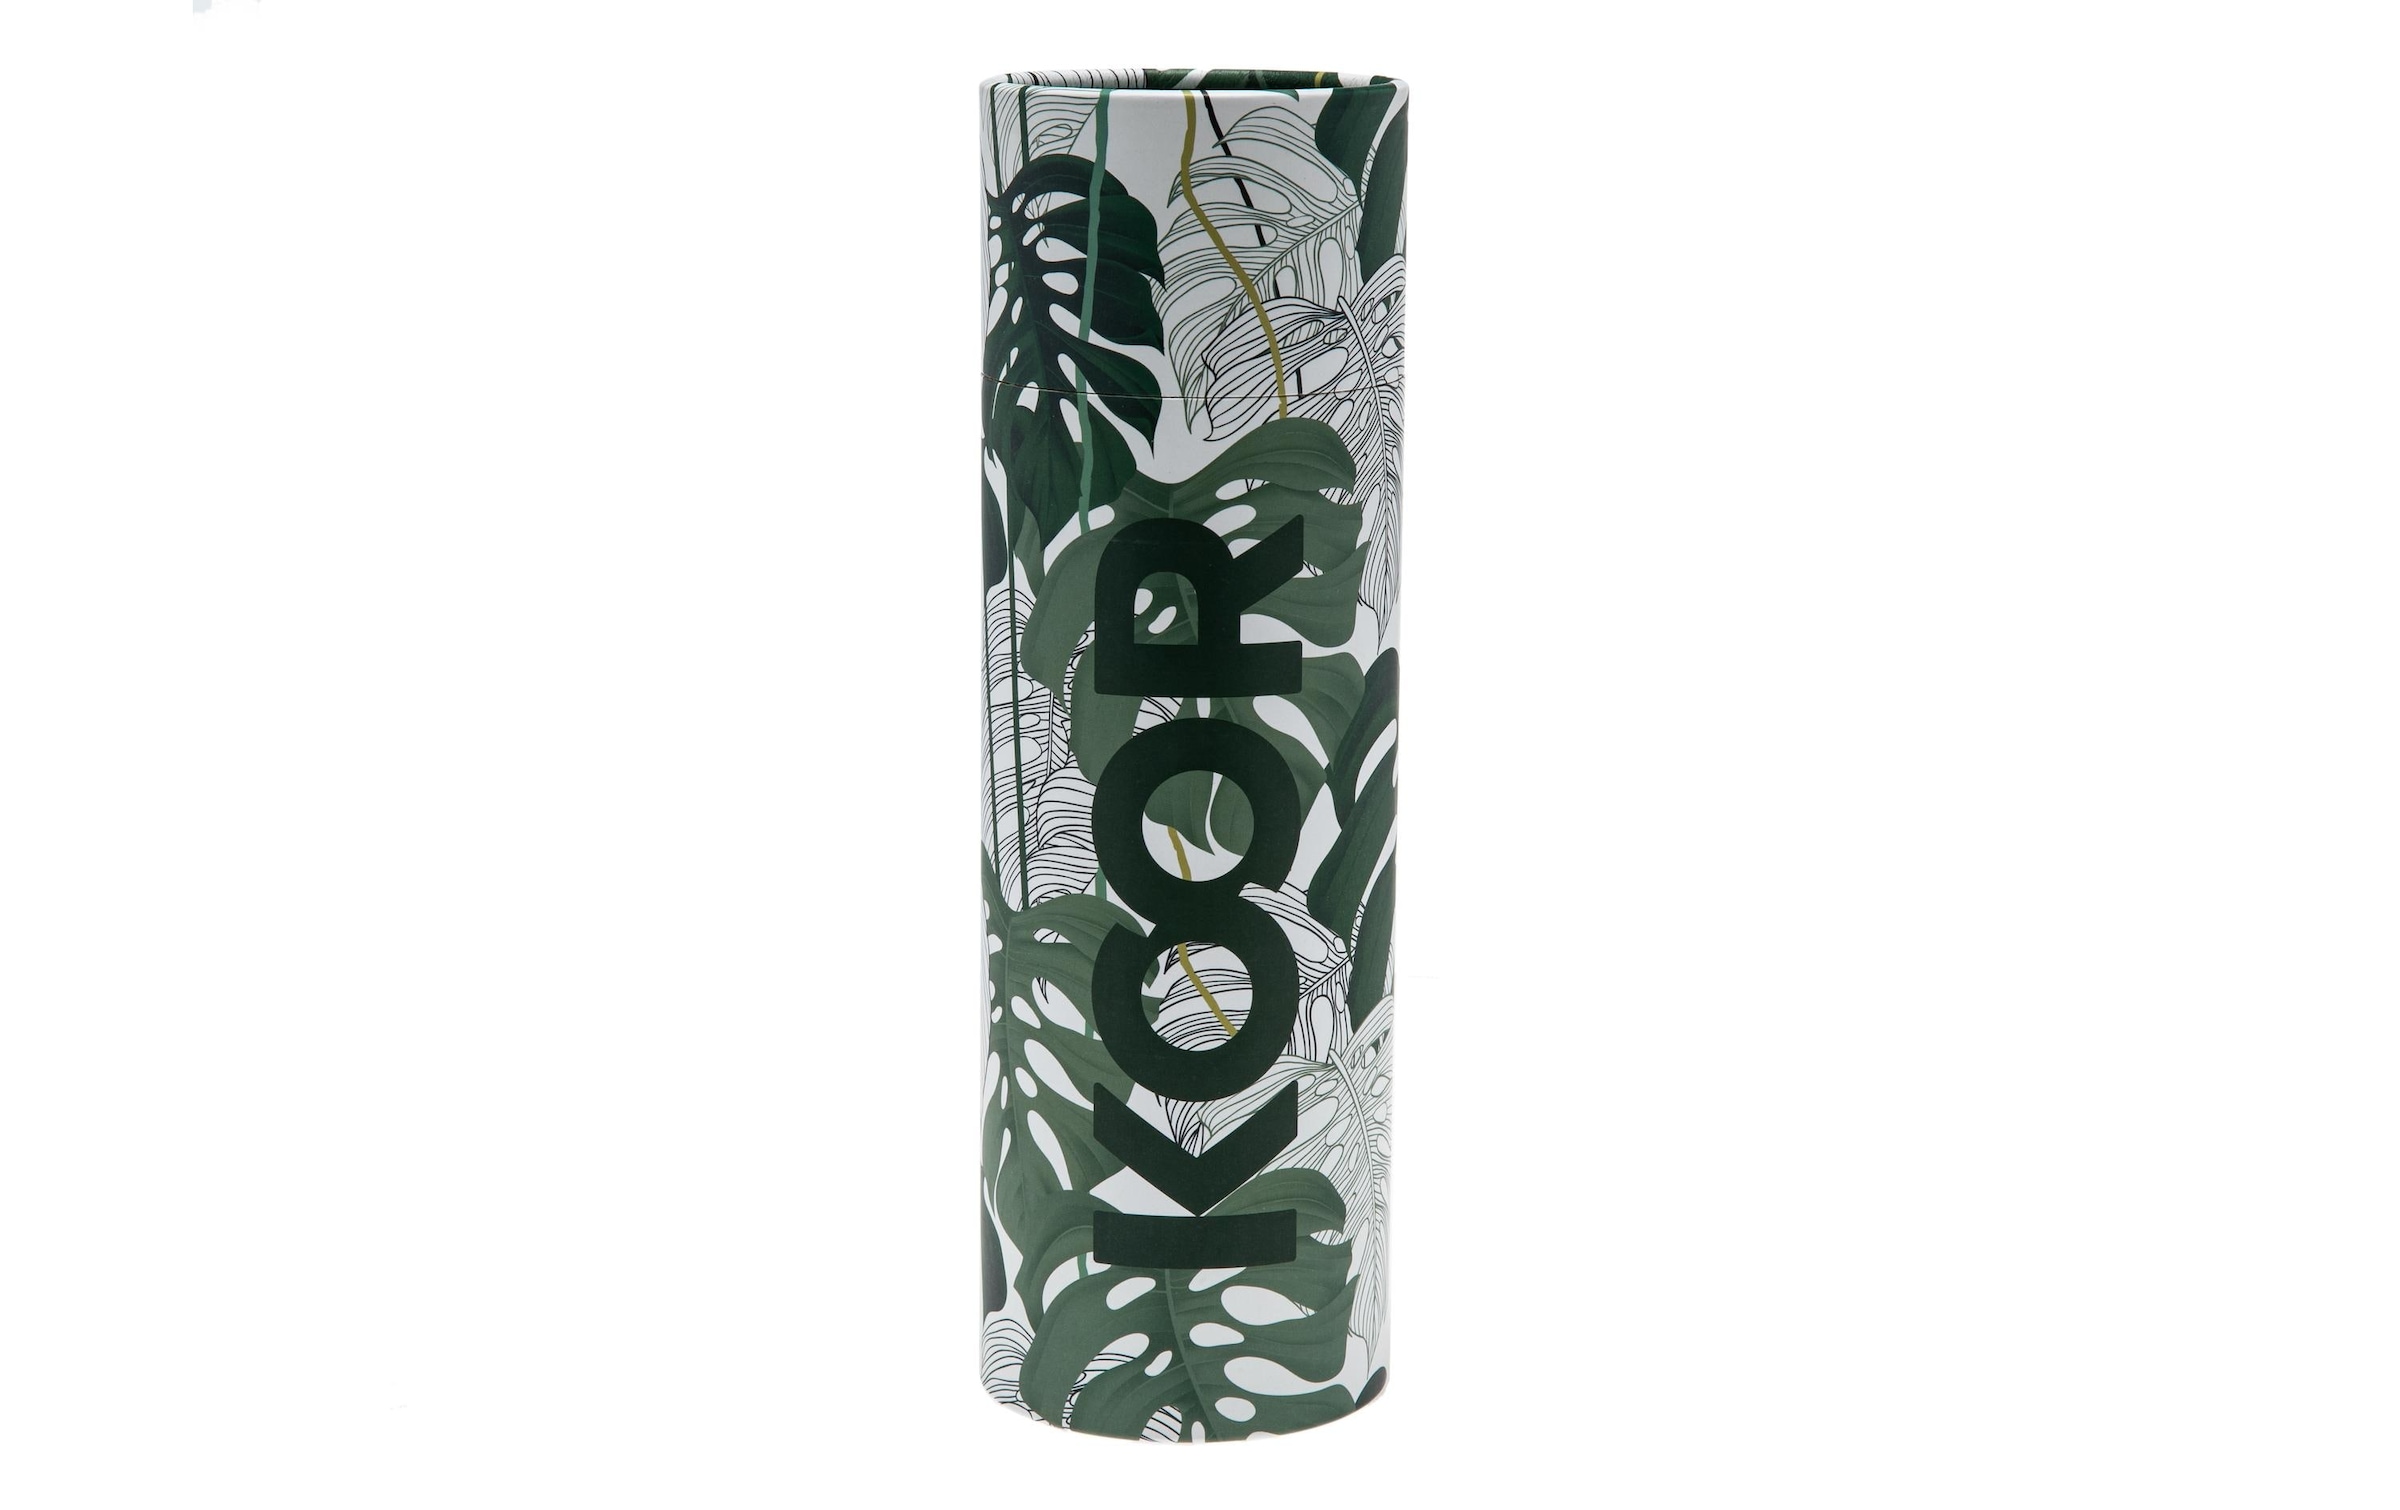 KOOR Trinkflasche »Green Philodendro«